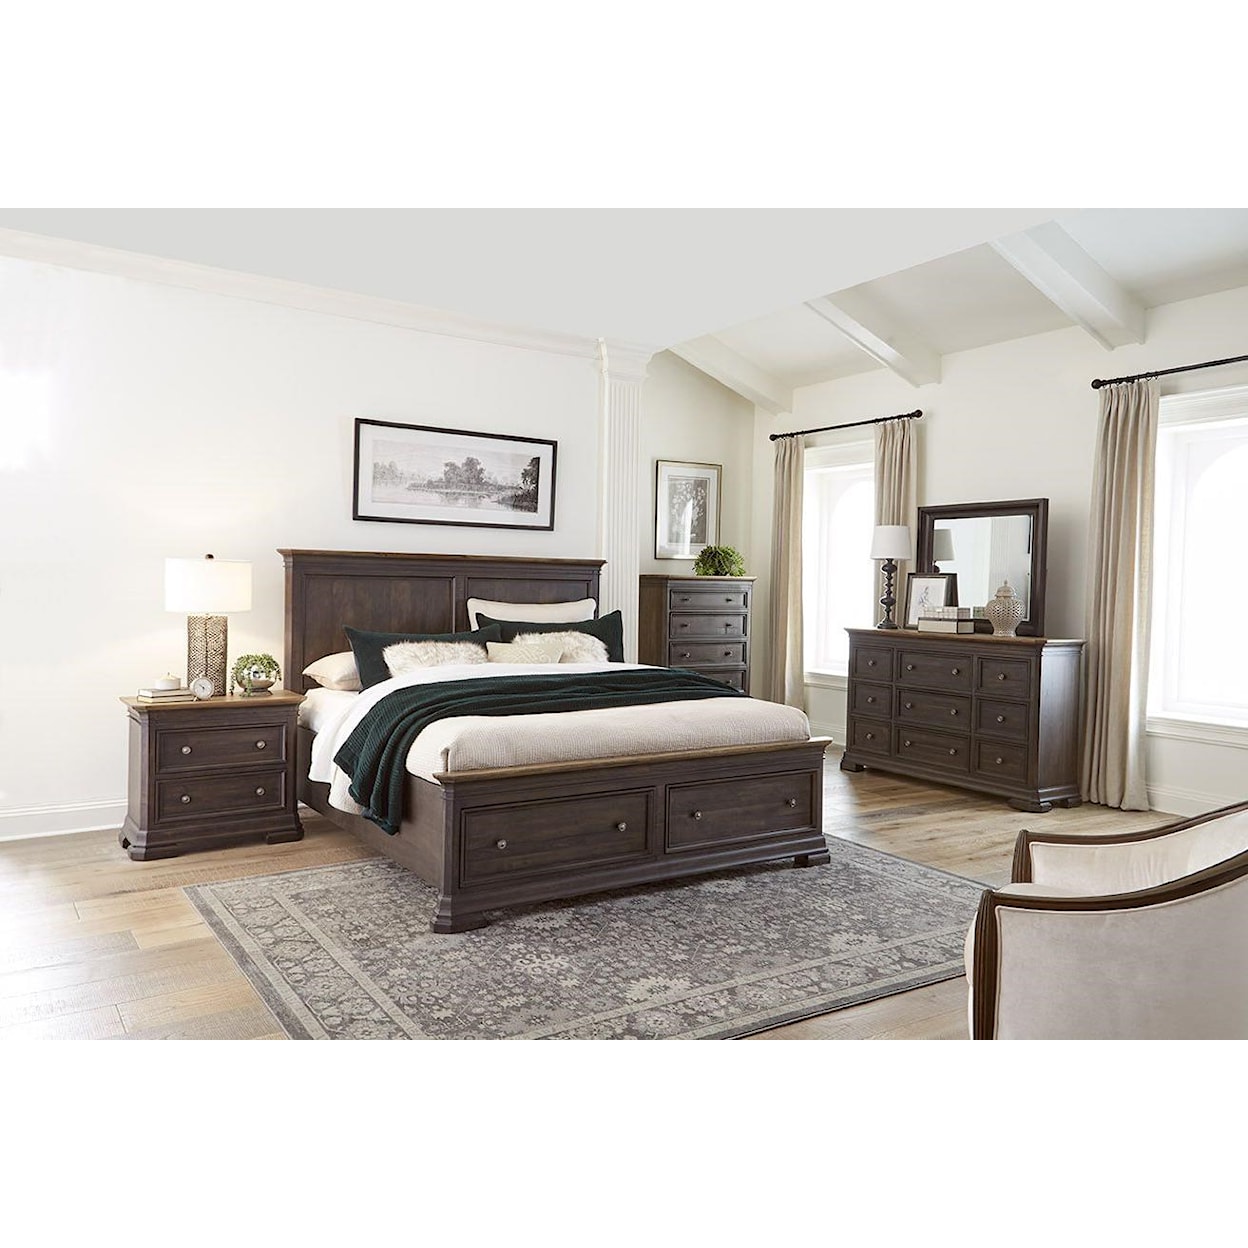 Napa Furniture Design Grand Louie King Bedroom Group